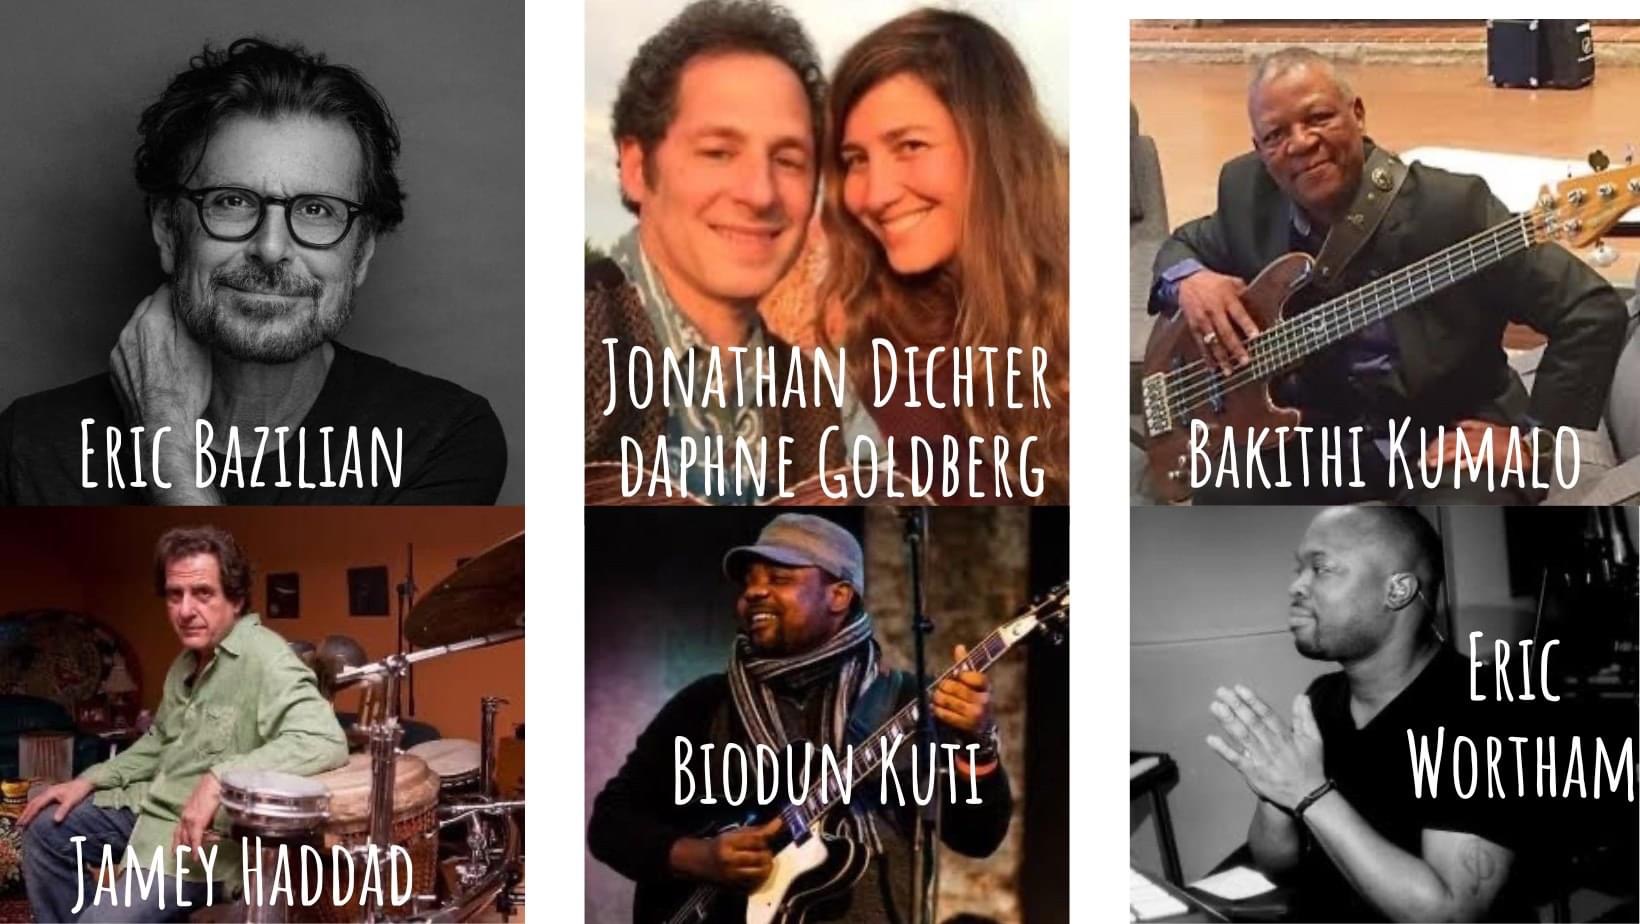 FRI. MAY 5: The One People Band: Eric Bazilian, Jonathan Dichter, Bakithi Kumalo, Jamey Haddad, Eric Wortham, Biodun Kuti and Daphne Goldberg